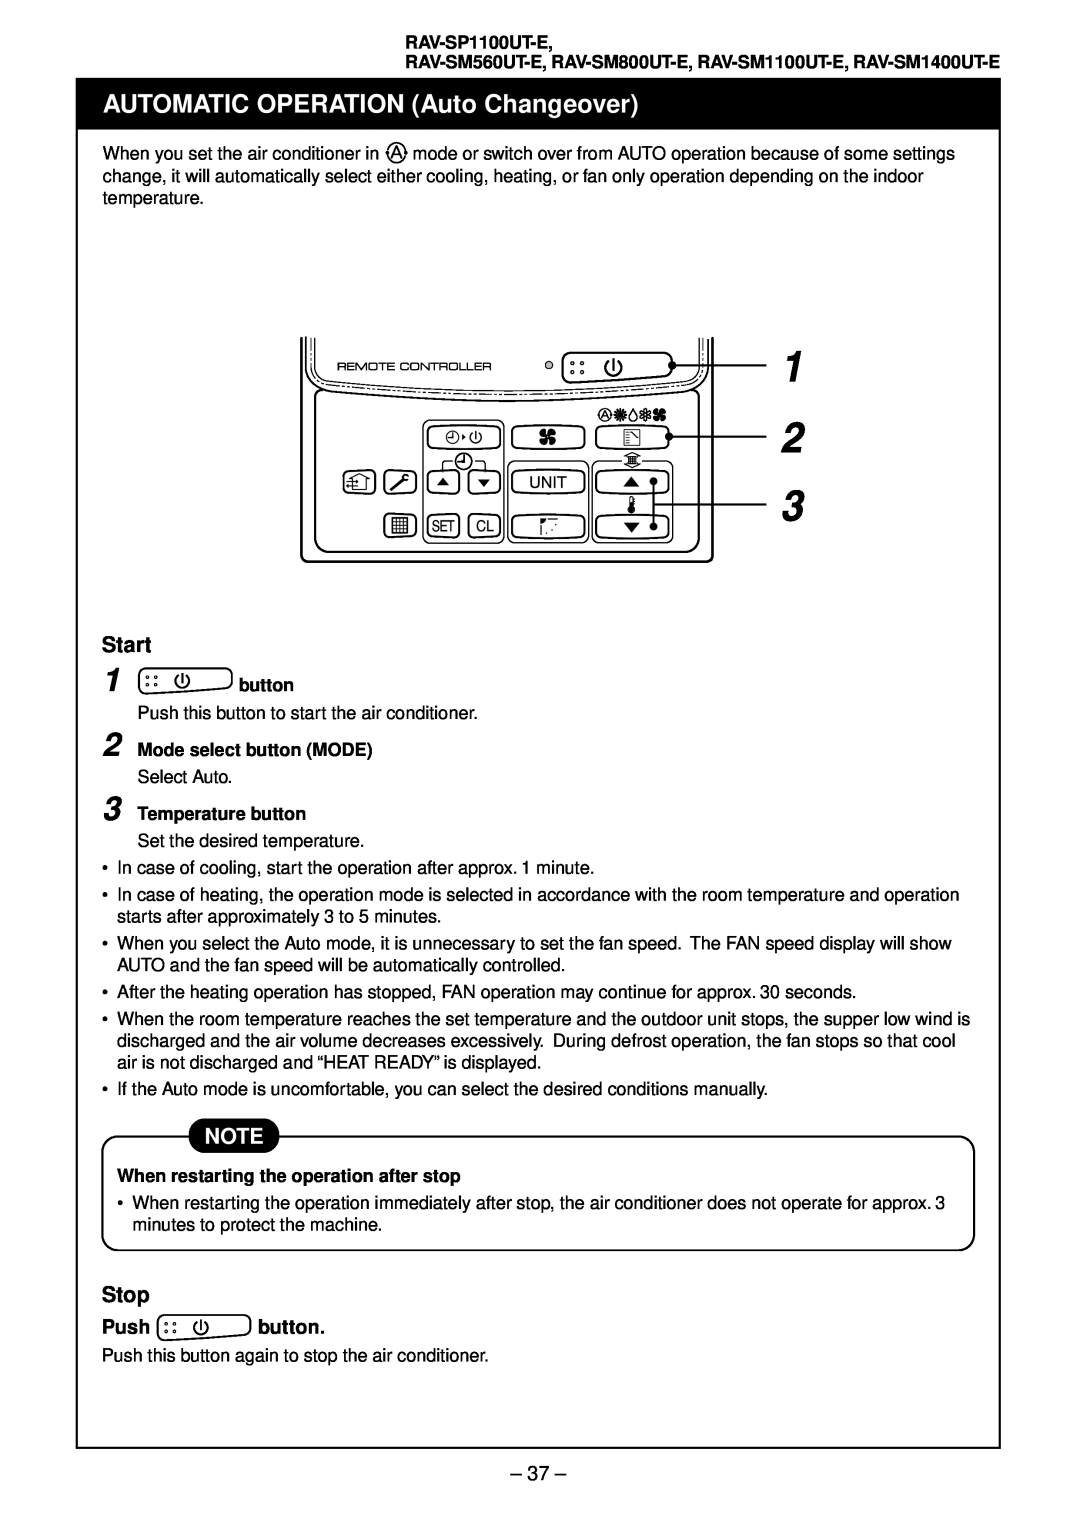 Toshiba RAV-SM1401AT-E AUTOMATIC OPERATION Auto Changeover, Start, Stop, Push button, RAV-SP1100UT-E, Temperature button 